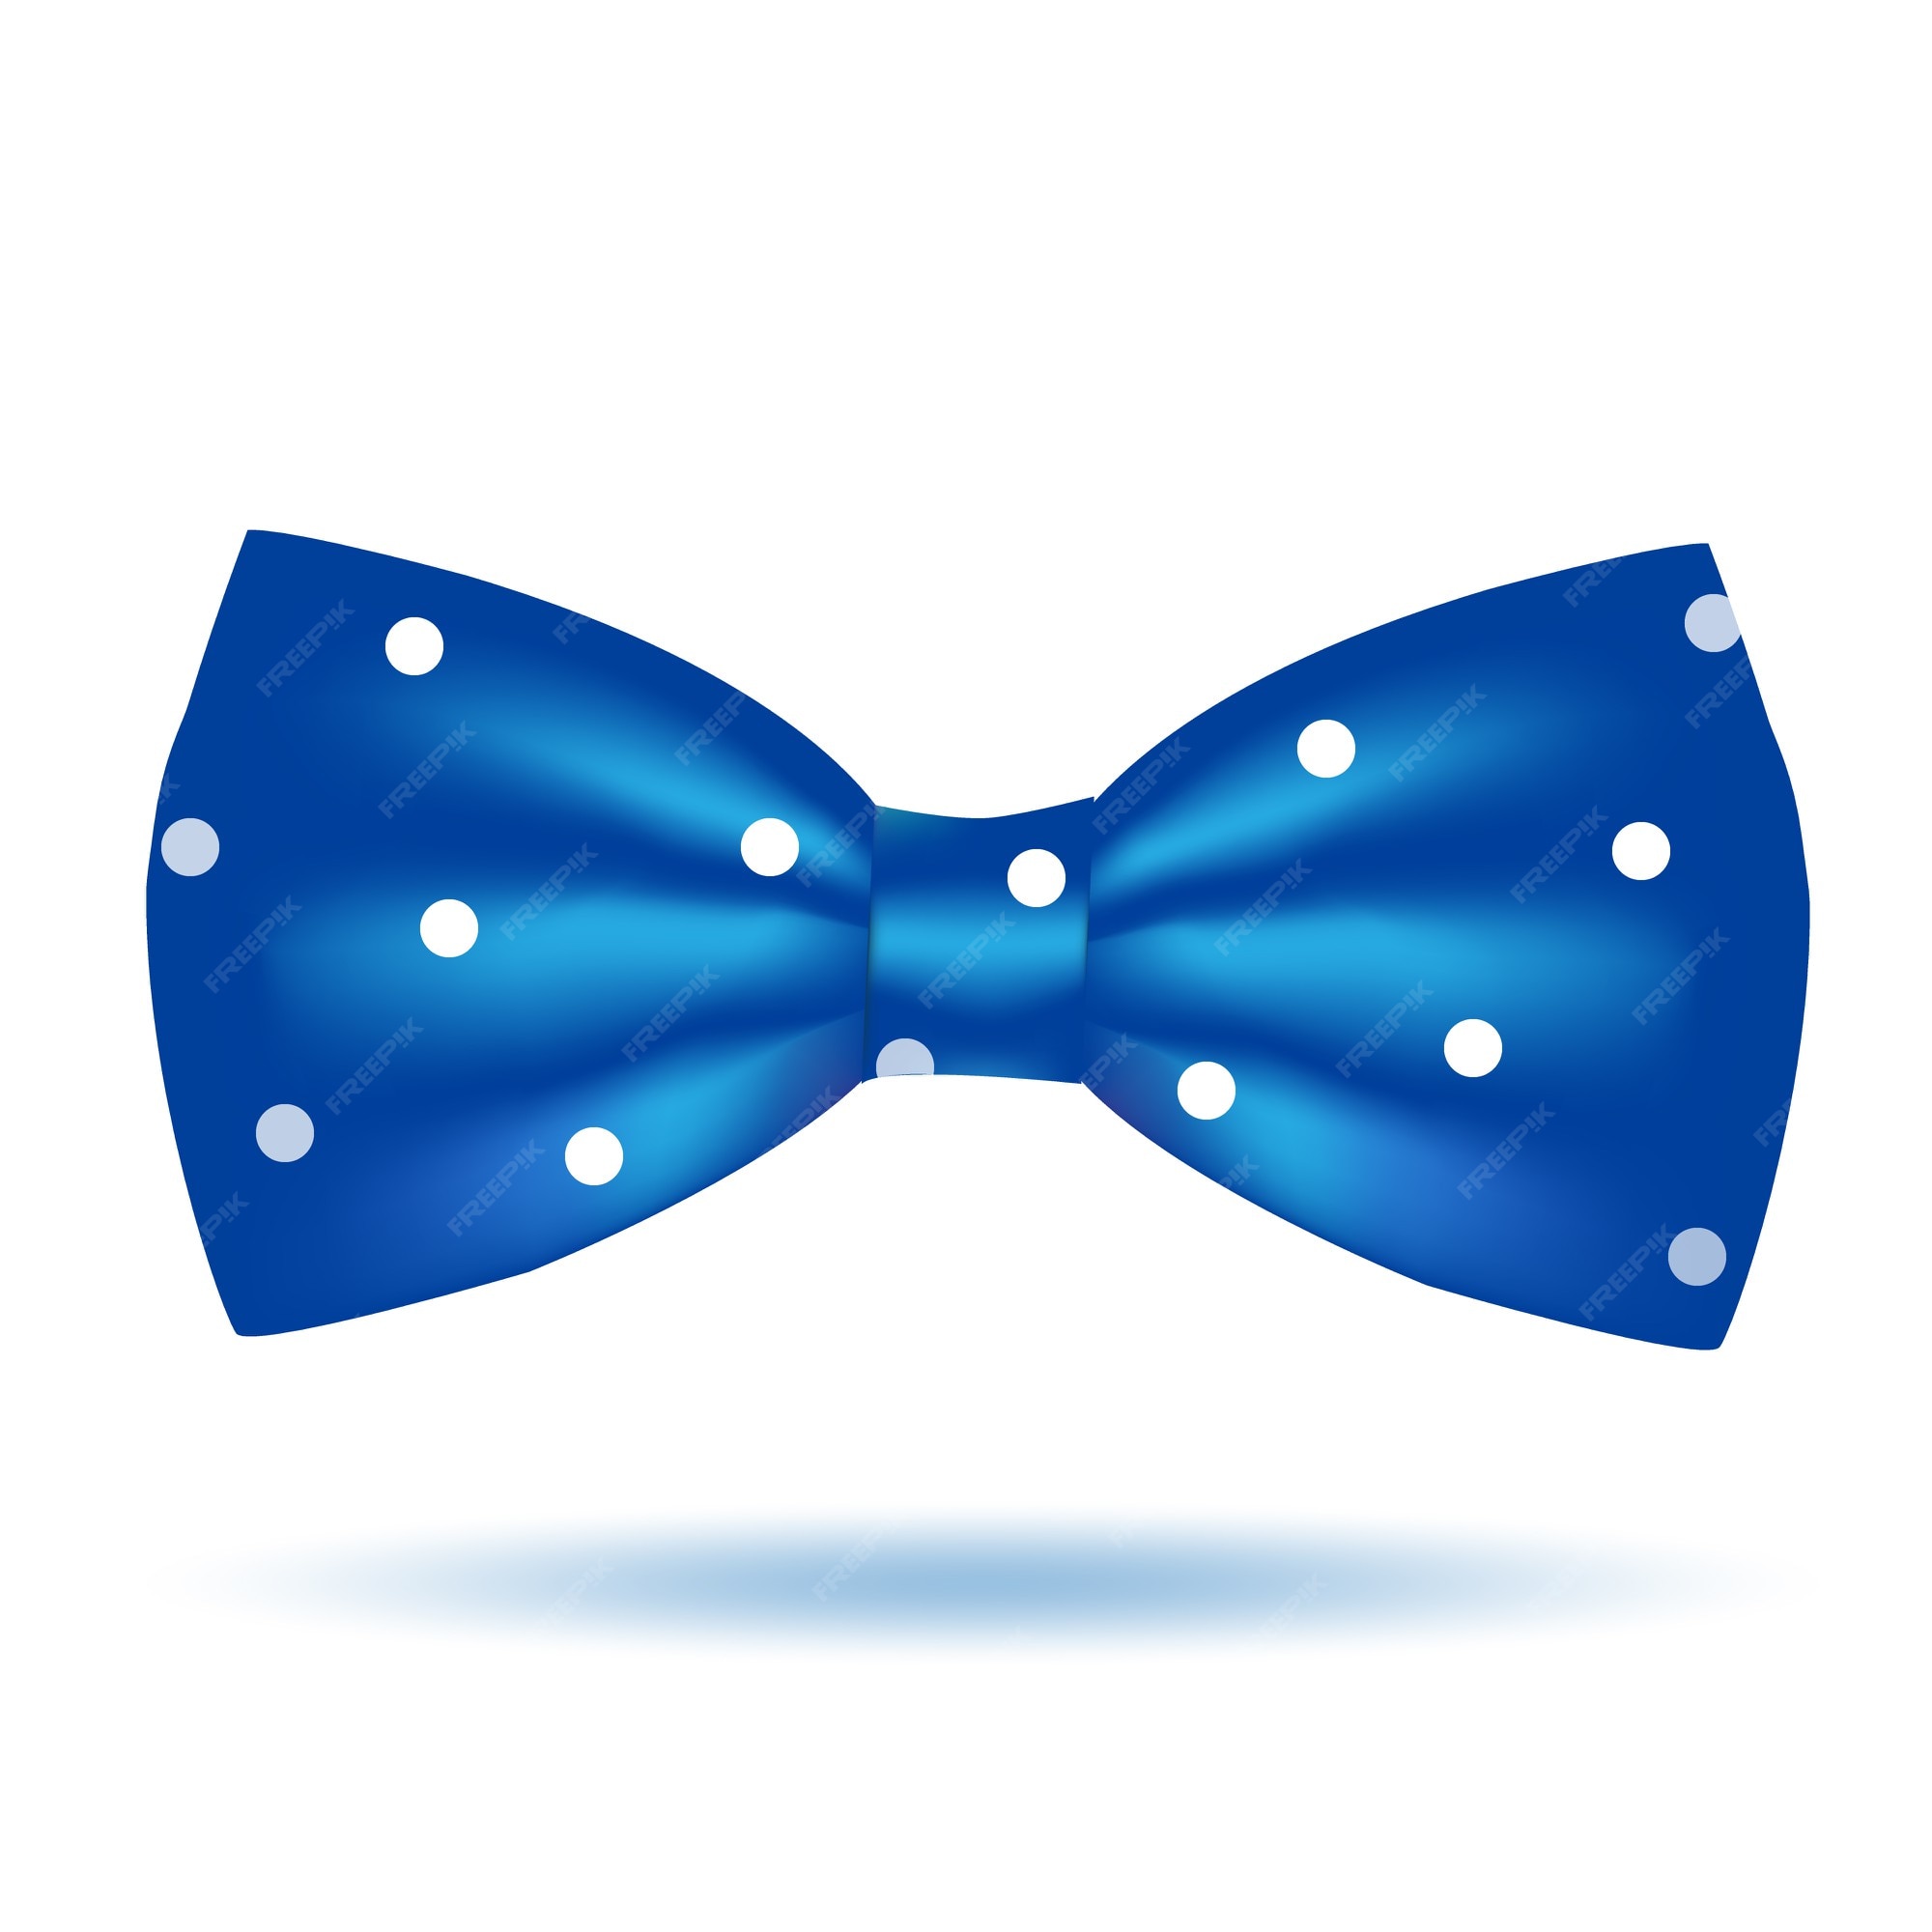 Digital Clipart - Bow Tie Clipart, Blue Bow Tie, Aqua Blue Bowtie Clip ...